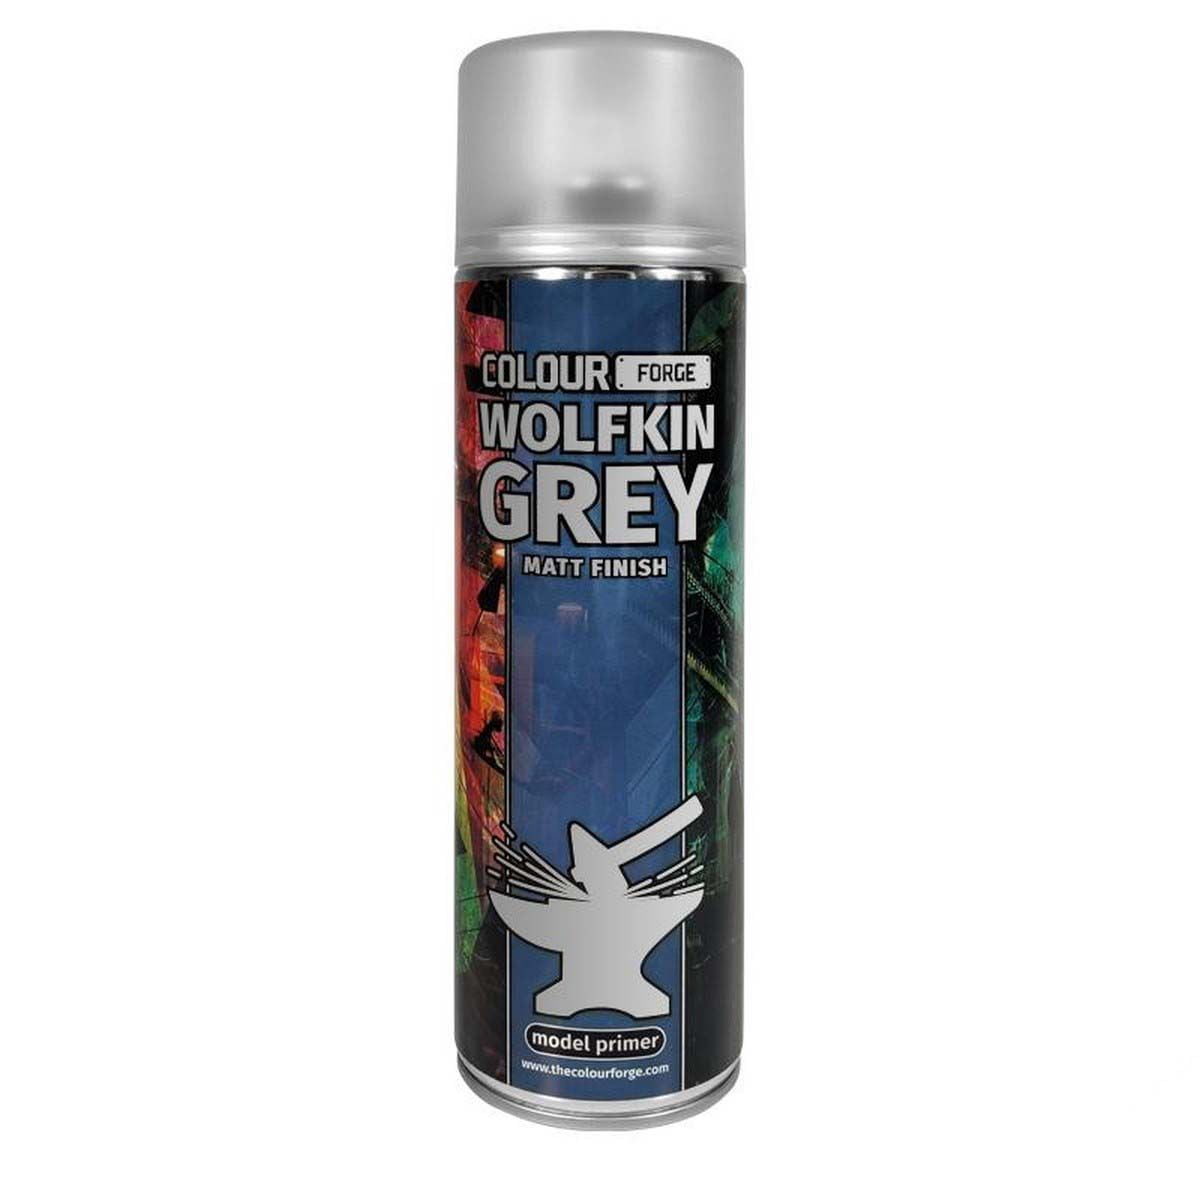 Colour Forge Wolfkin Grey Spray